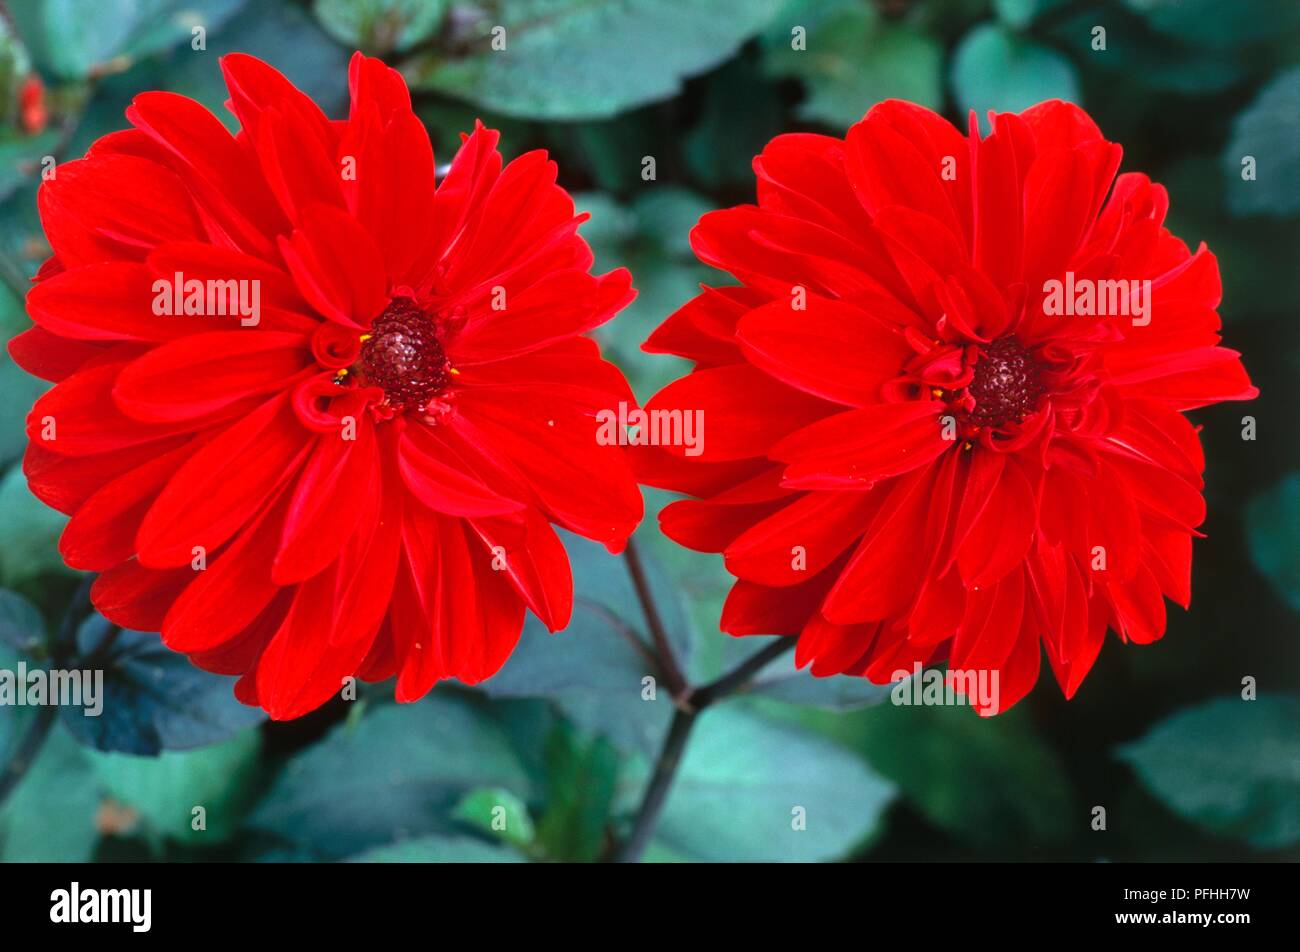 Dahlia 'Grenadier', two bright red flowers Stock Photo